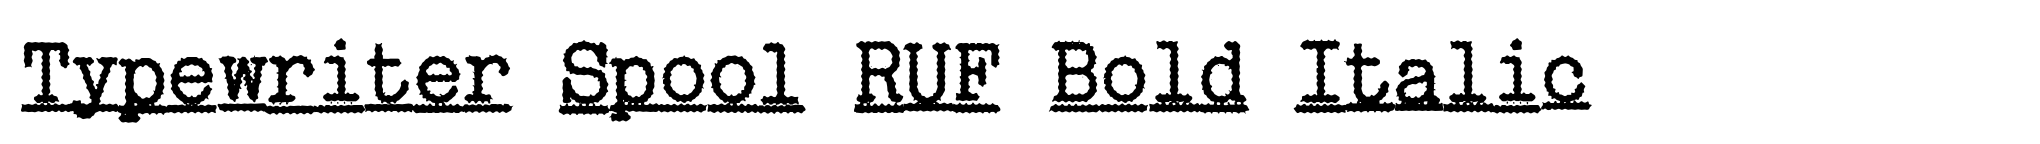 Typewriter Spool RUF Bold Italic image